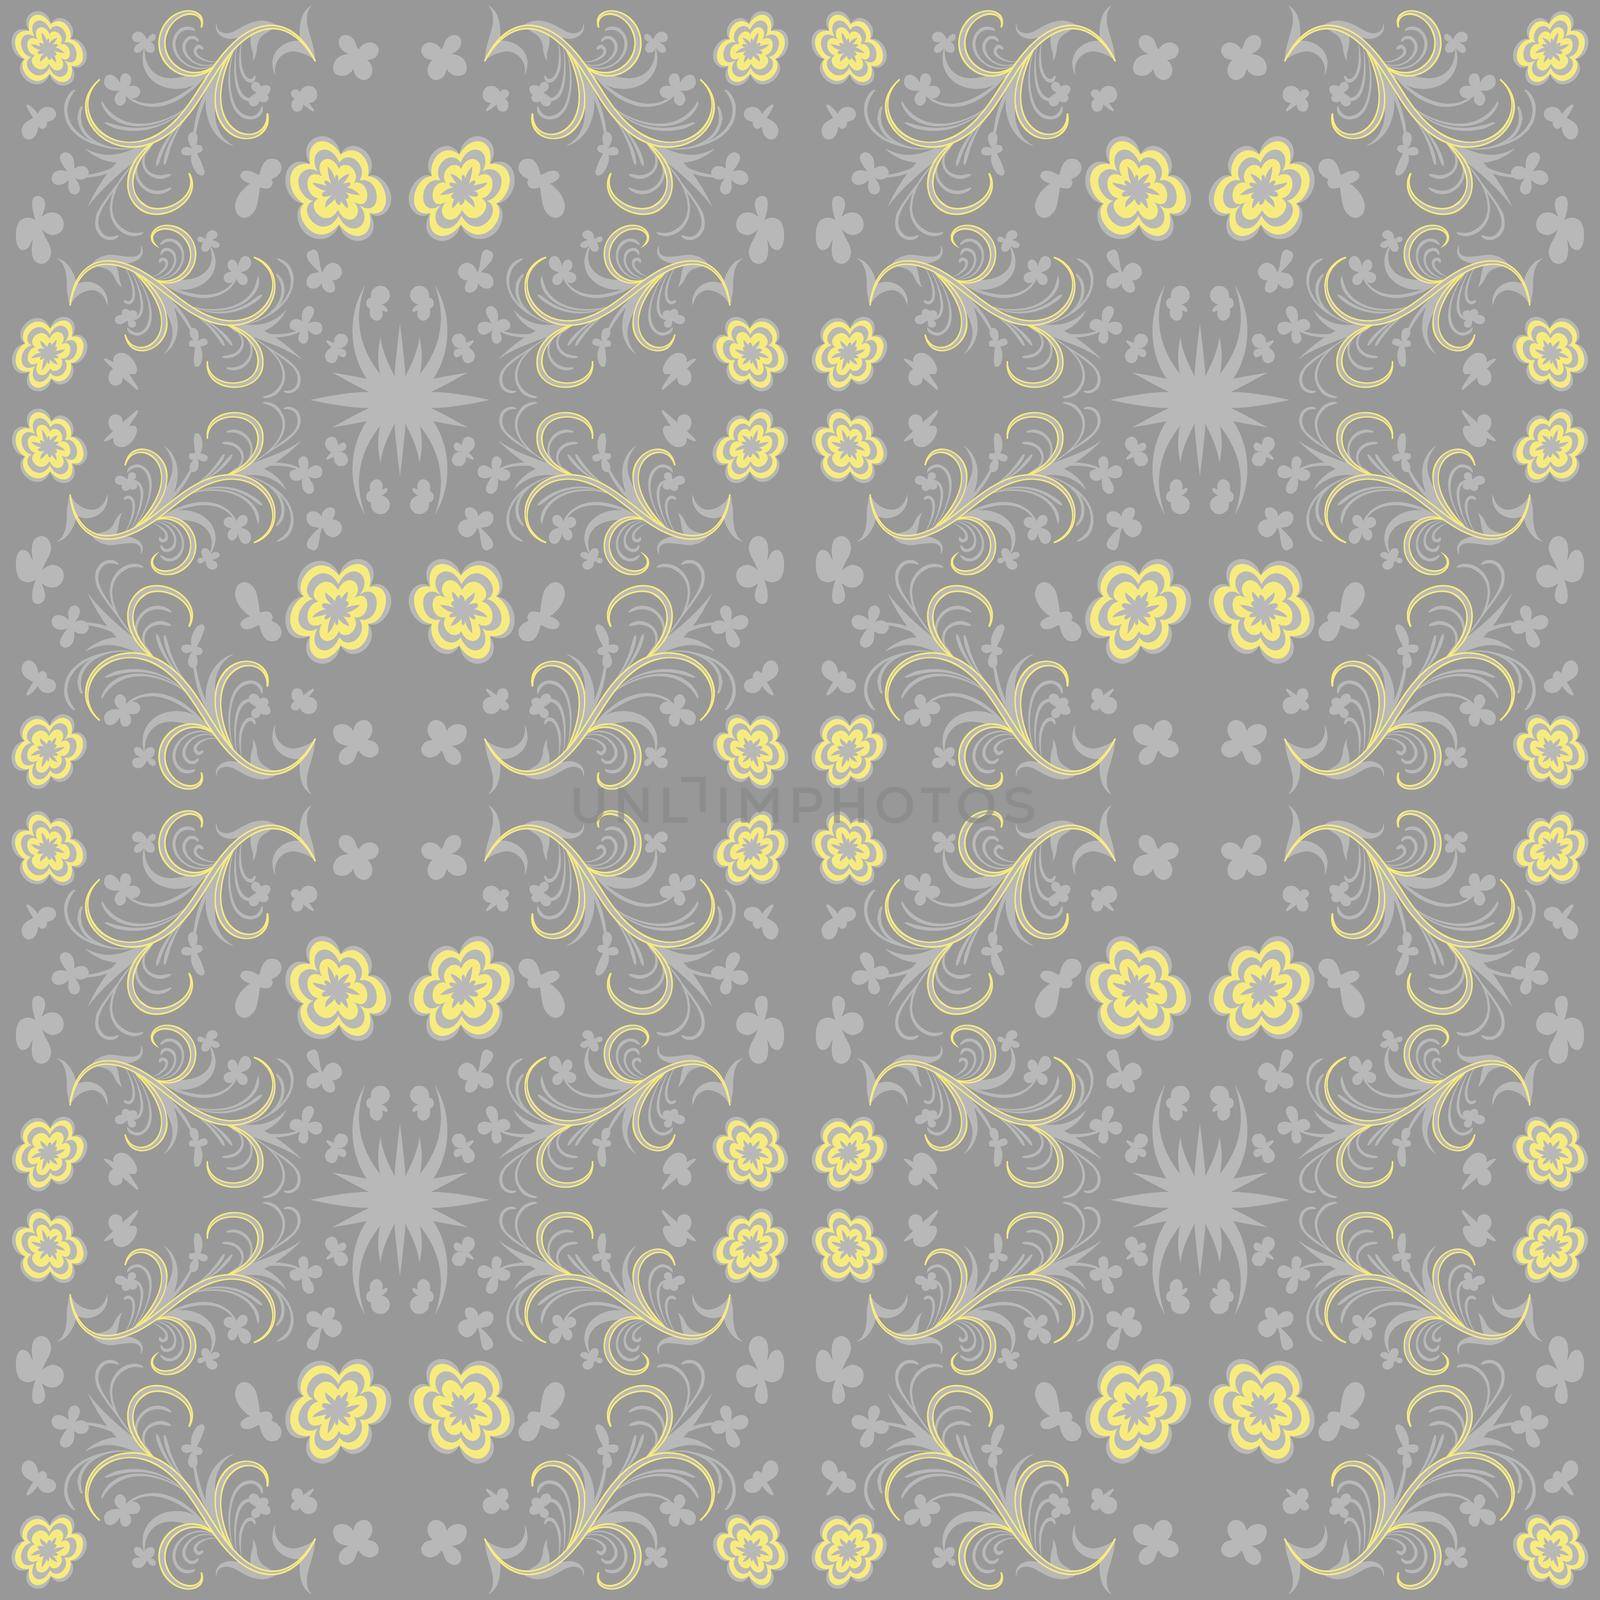 Floral fantasy damask seamless pattern by eskimos